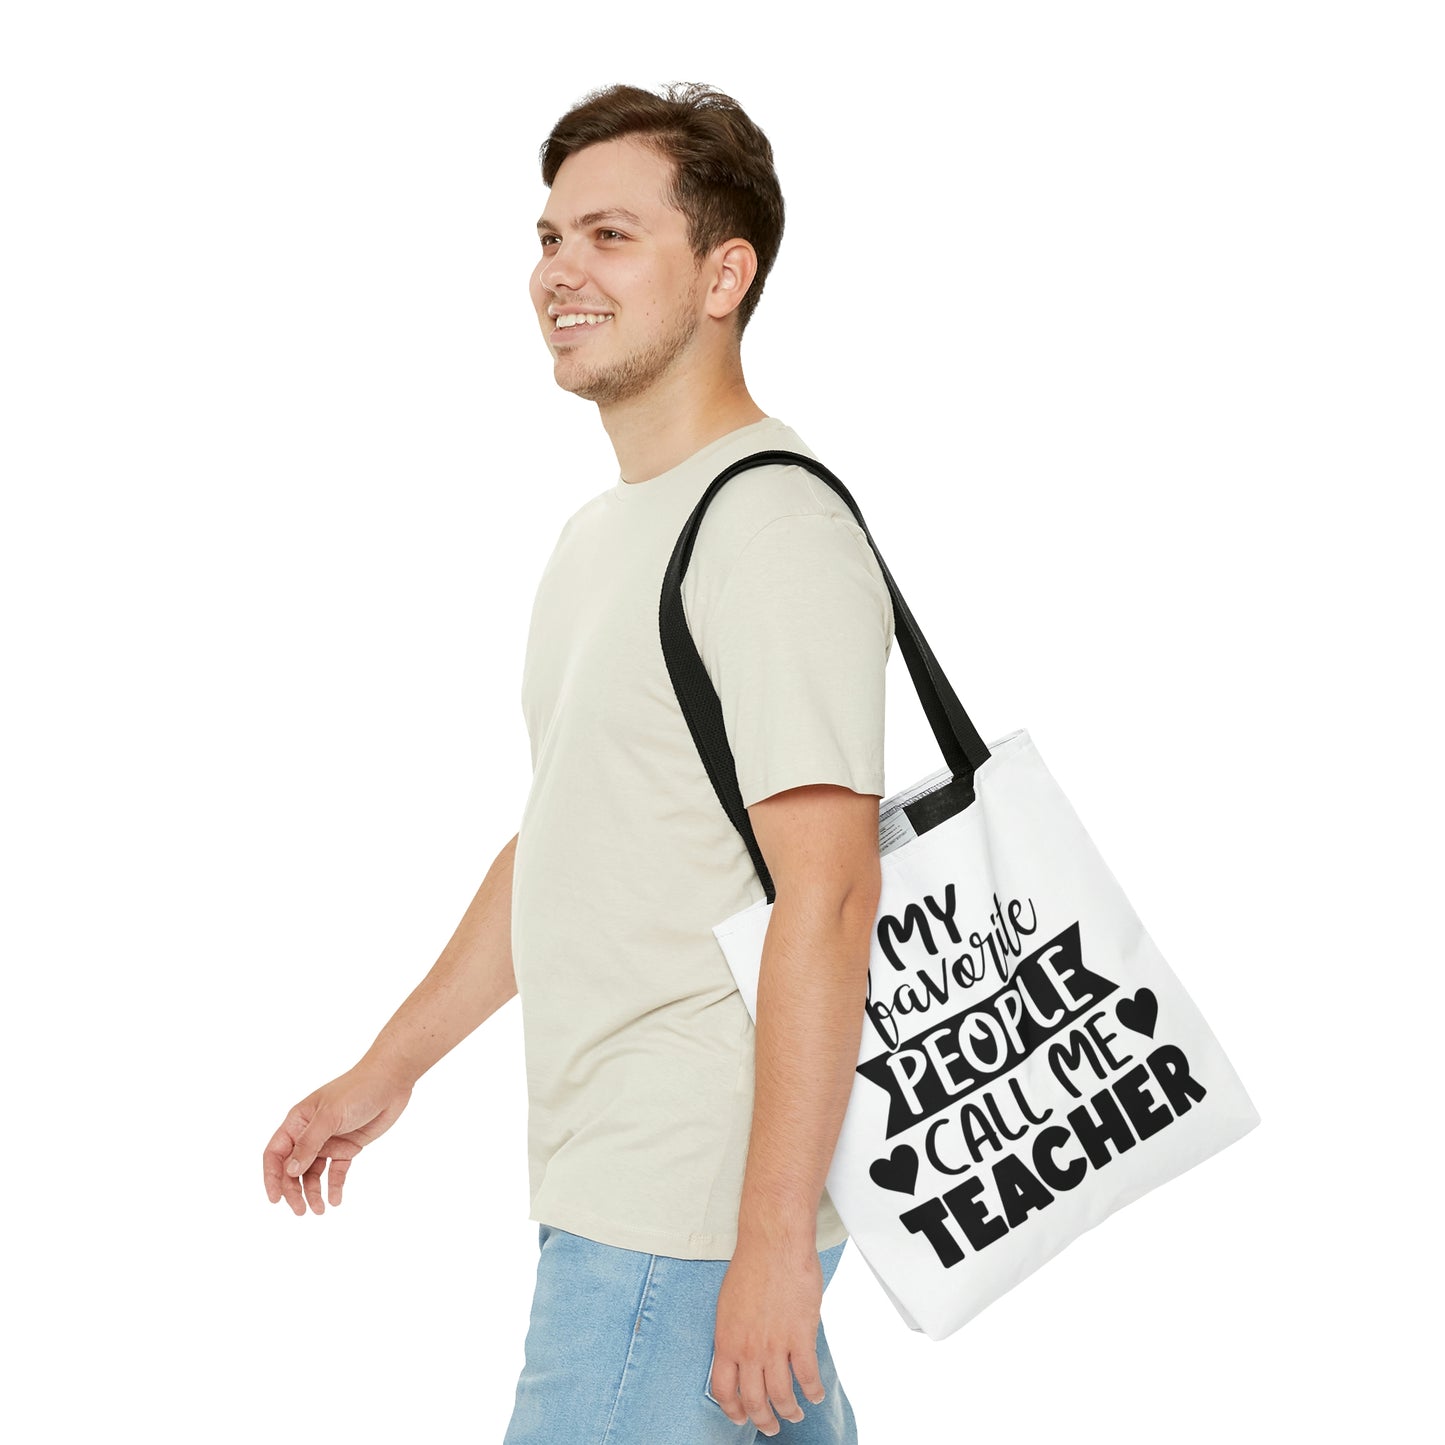 "My favorite people call me teacher"  Tote Bag